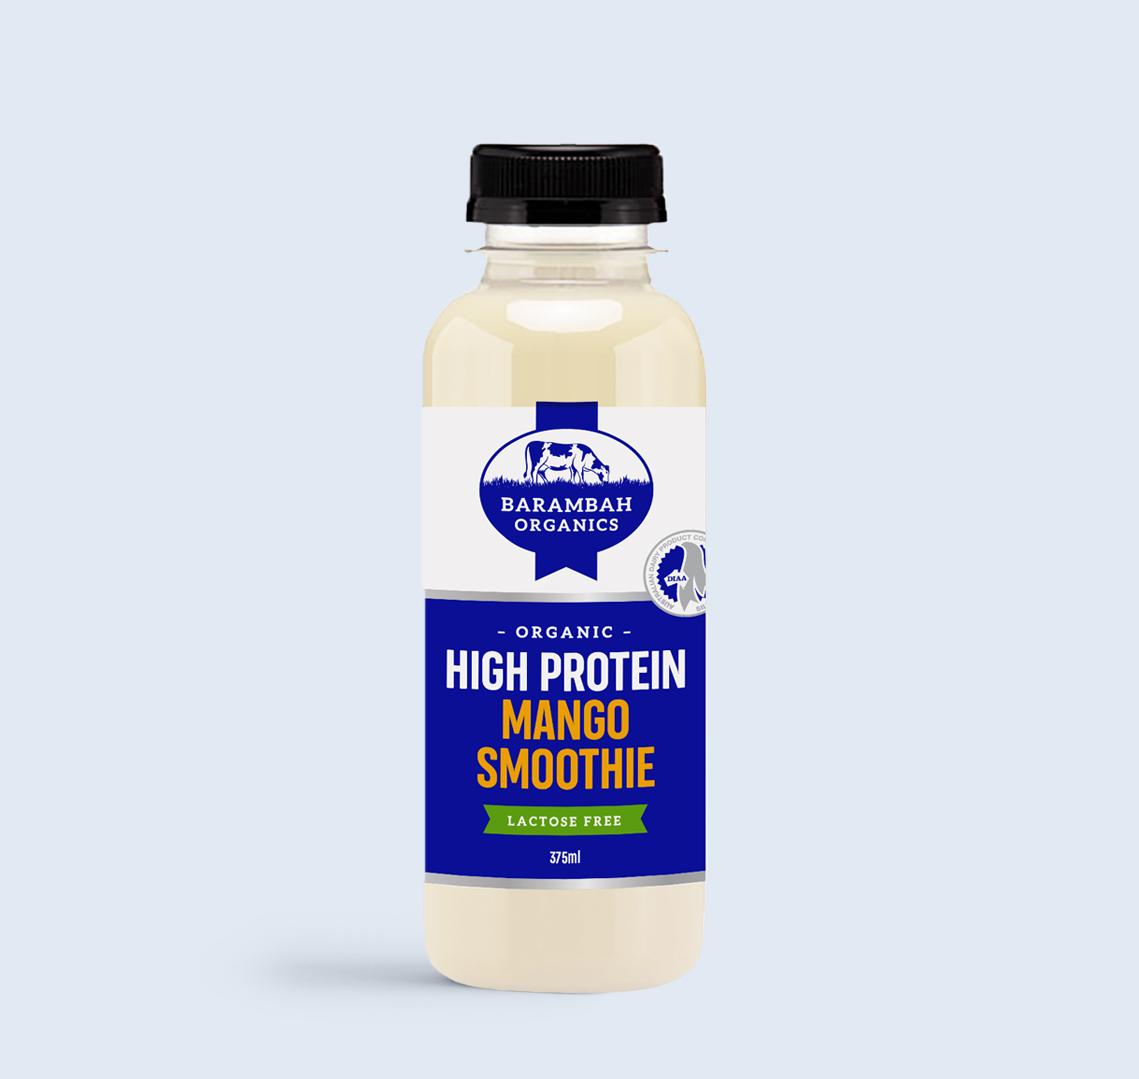 375ml of High Protein Mango Smoothie - Mango Smoothie - Barambah Organics